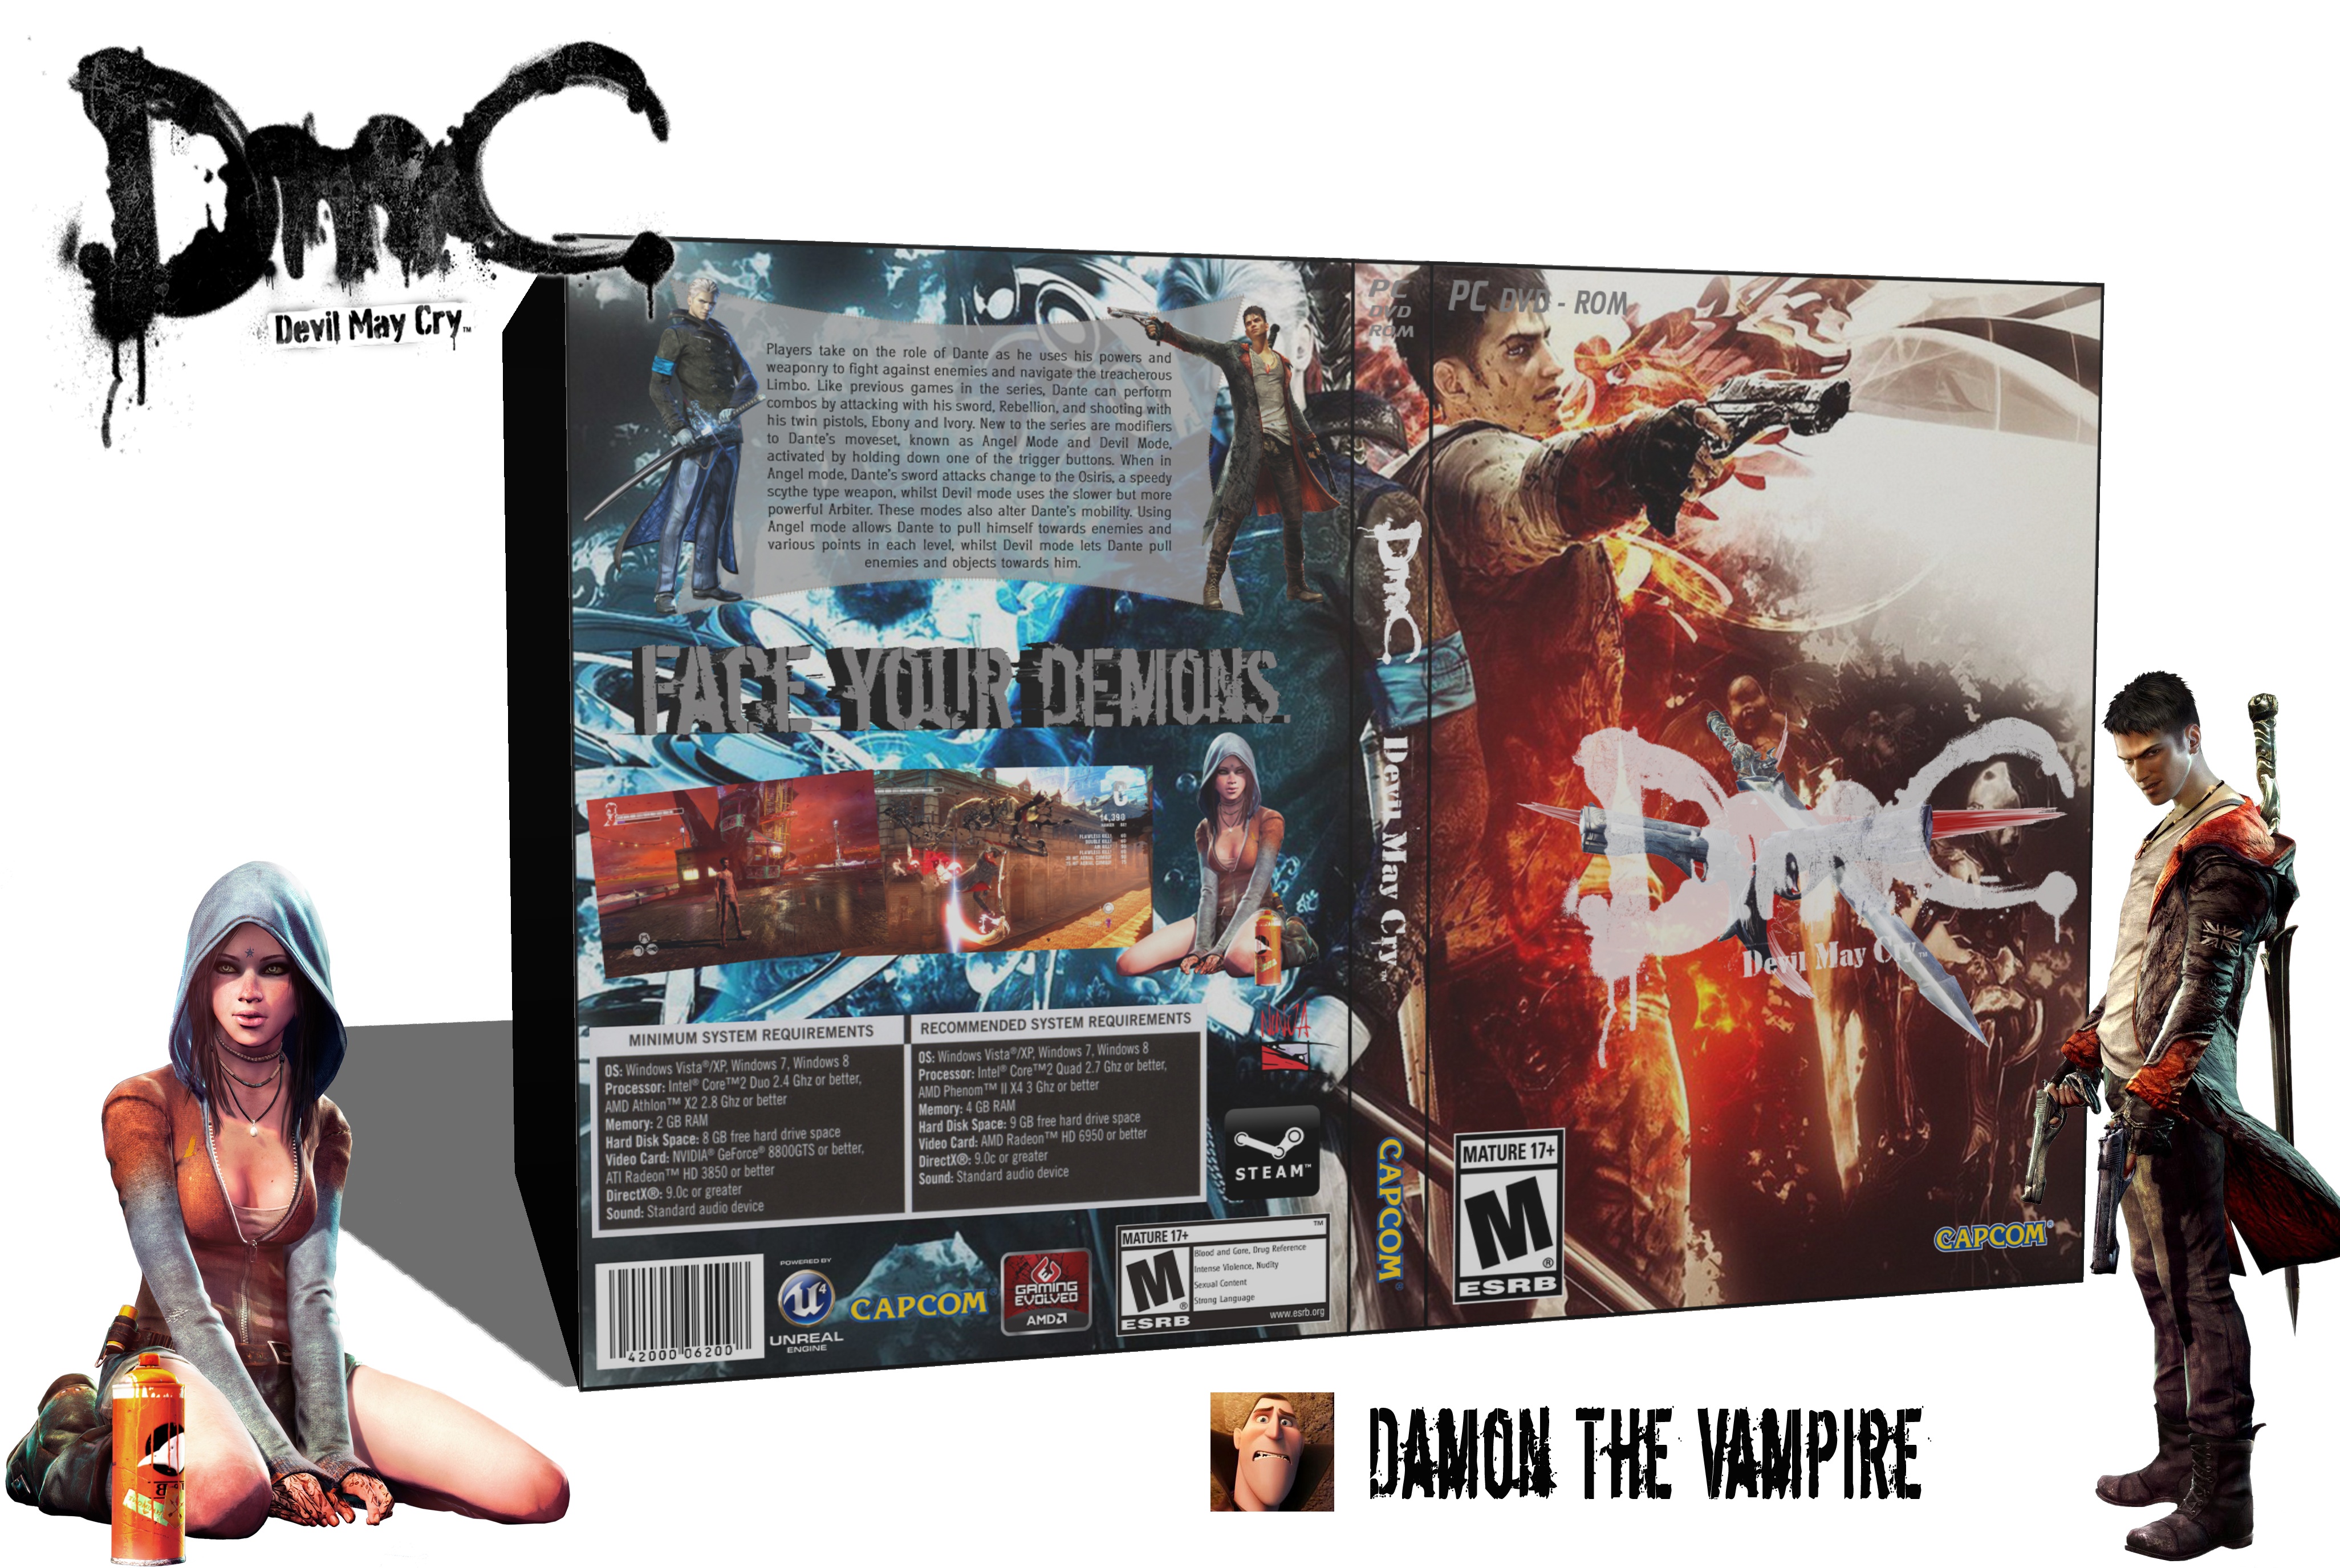 DmC Devil May Cry box cover